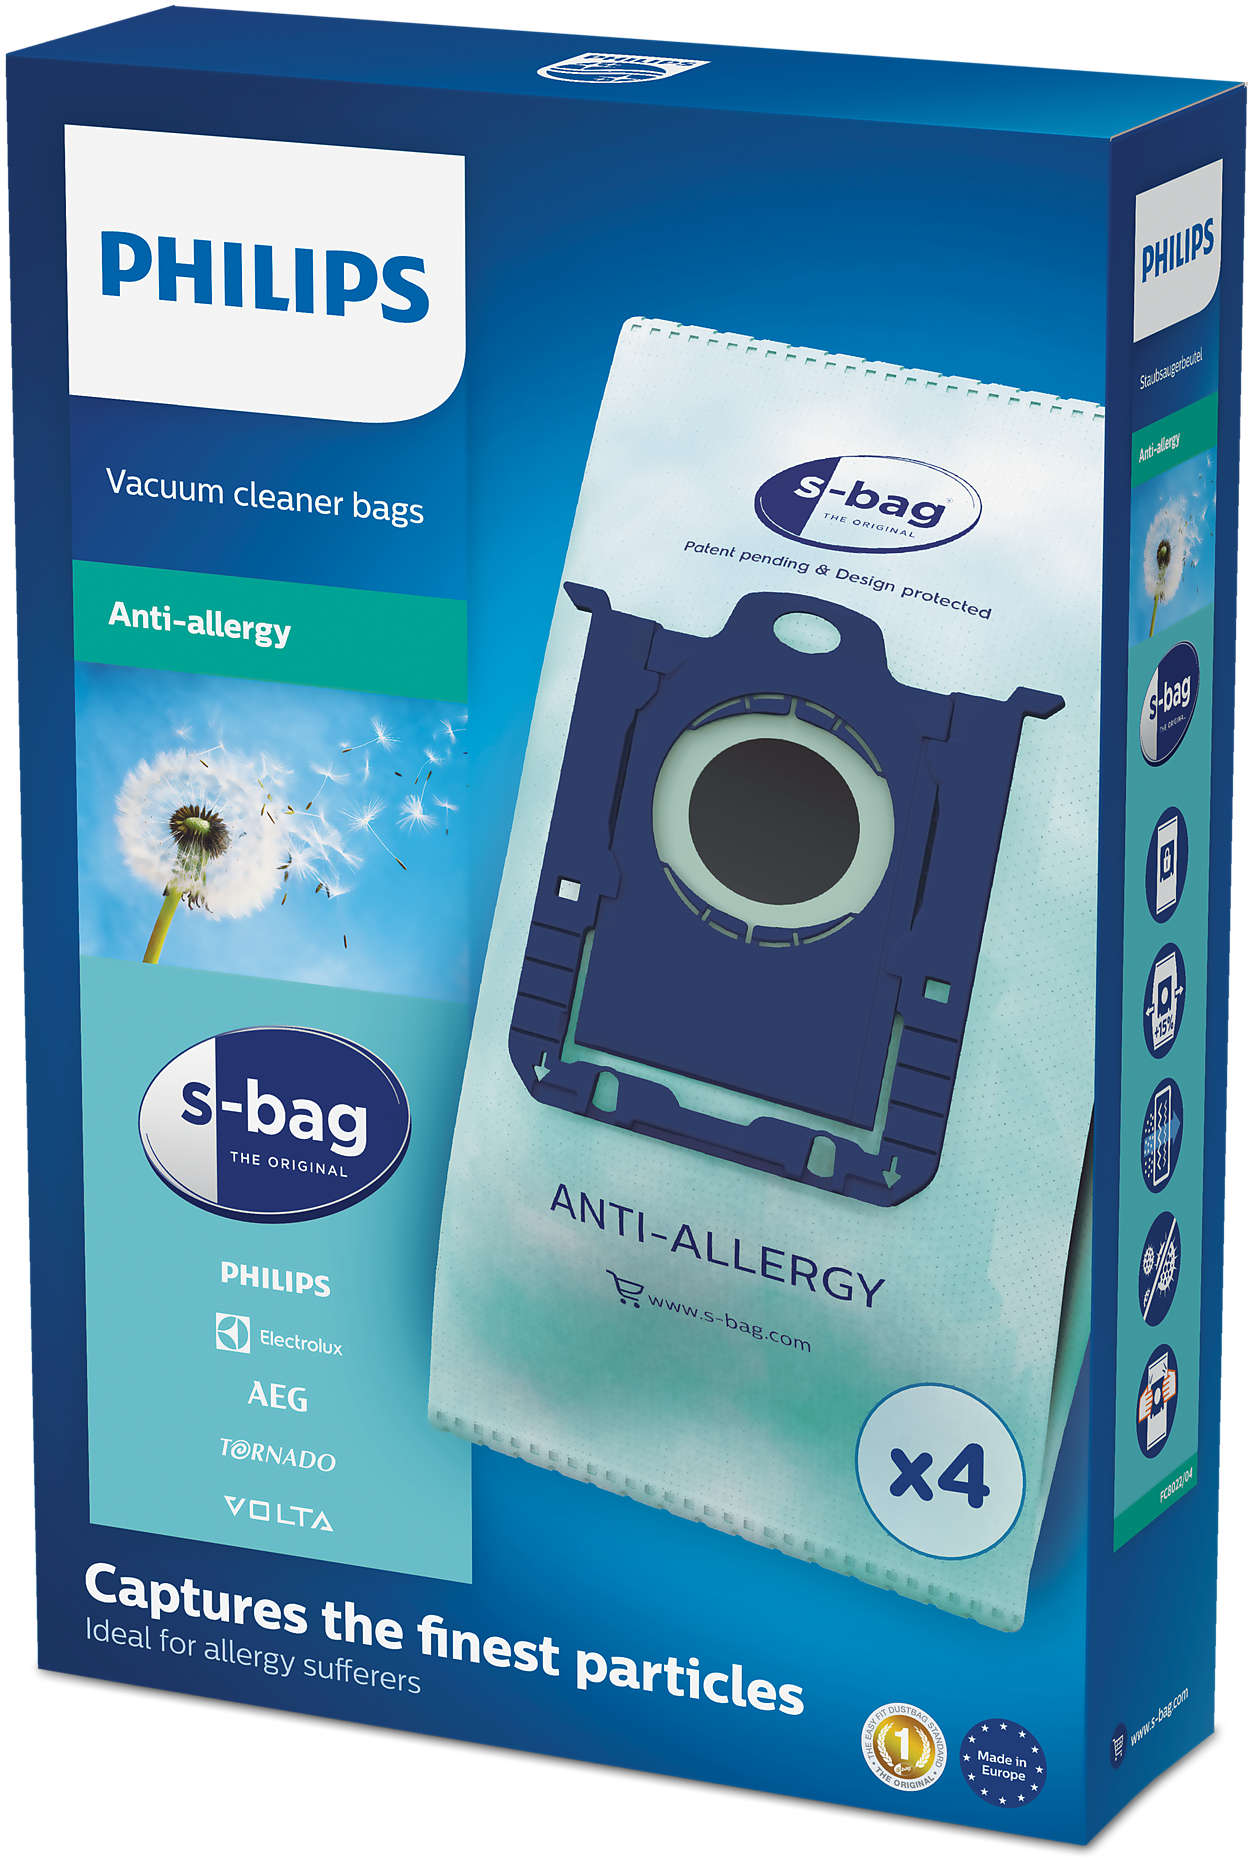 Vrecko s-bag® Anti-Allergy